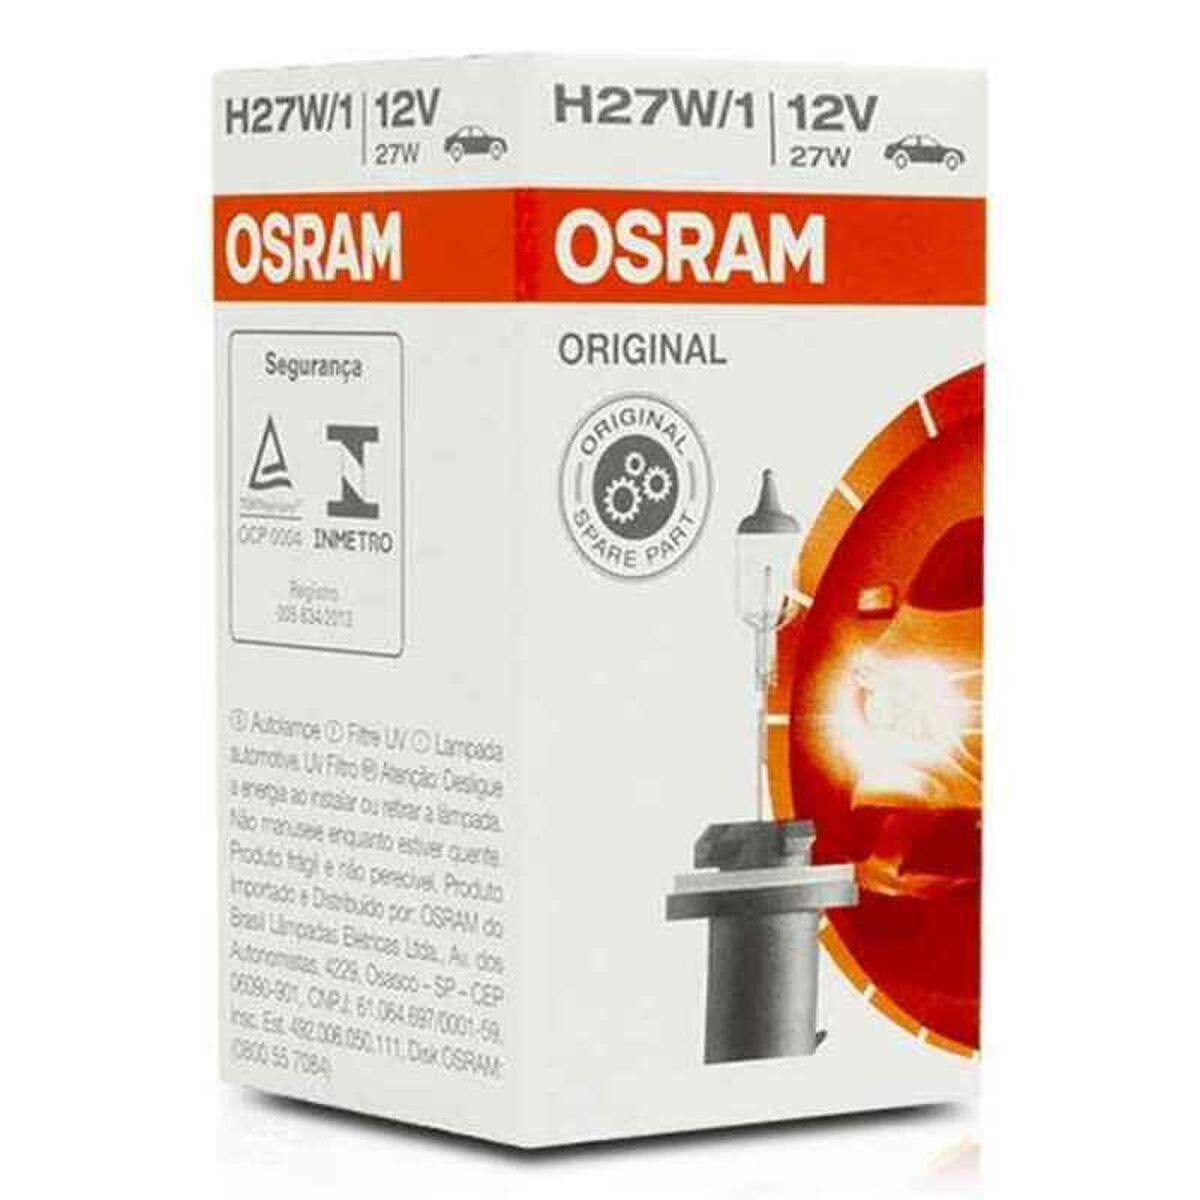 Ampoule pour voiture OS880 Osram OS880 H27W/1 27W 12V 0